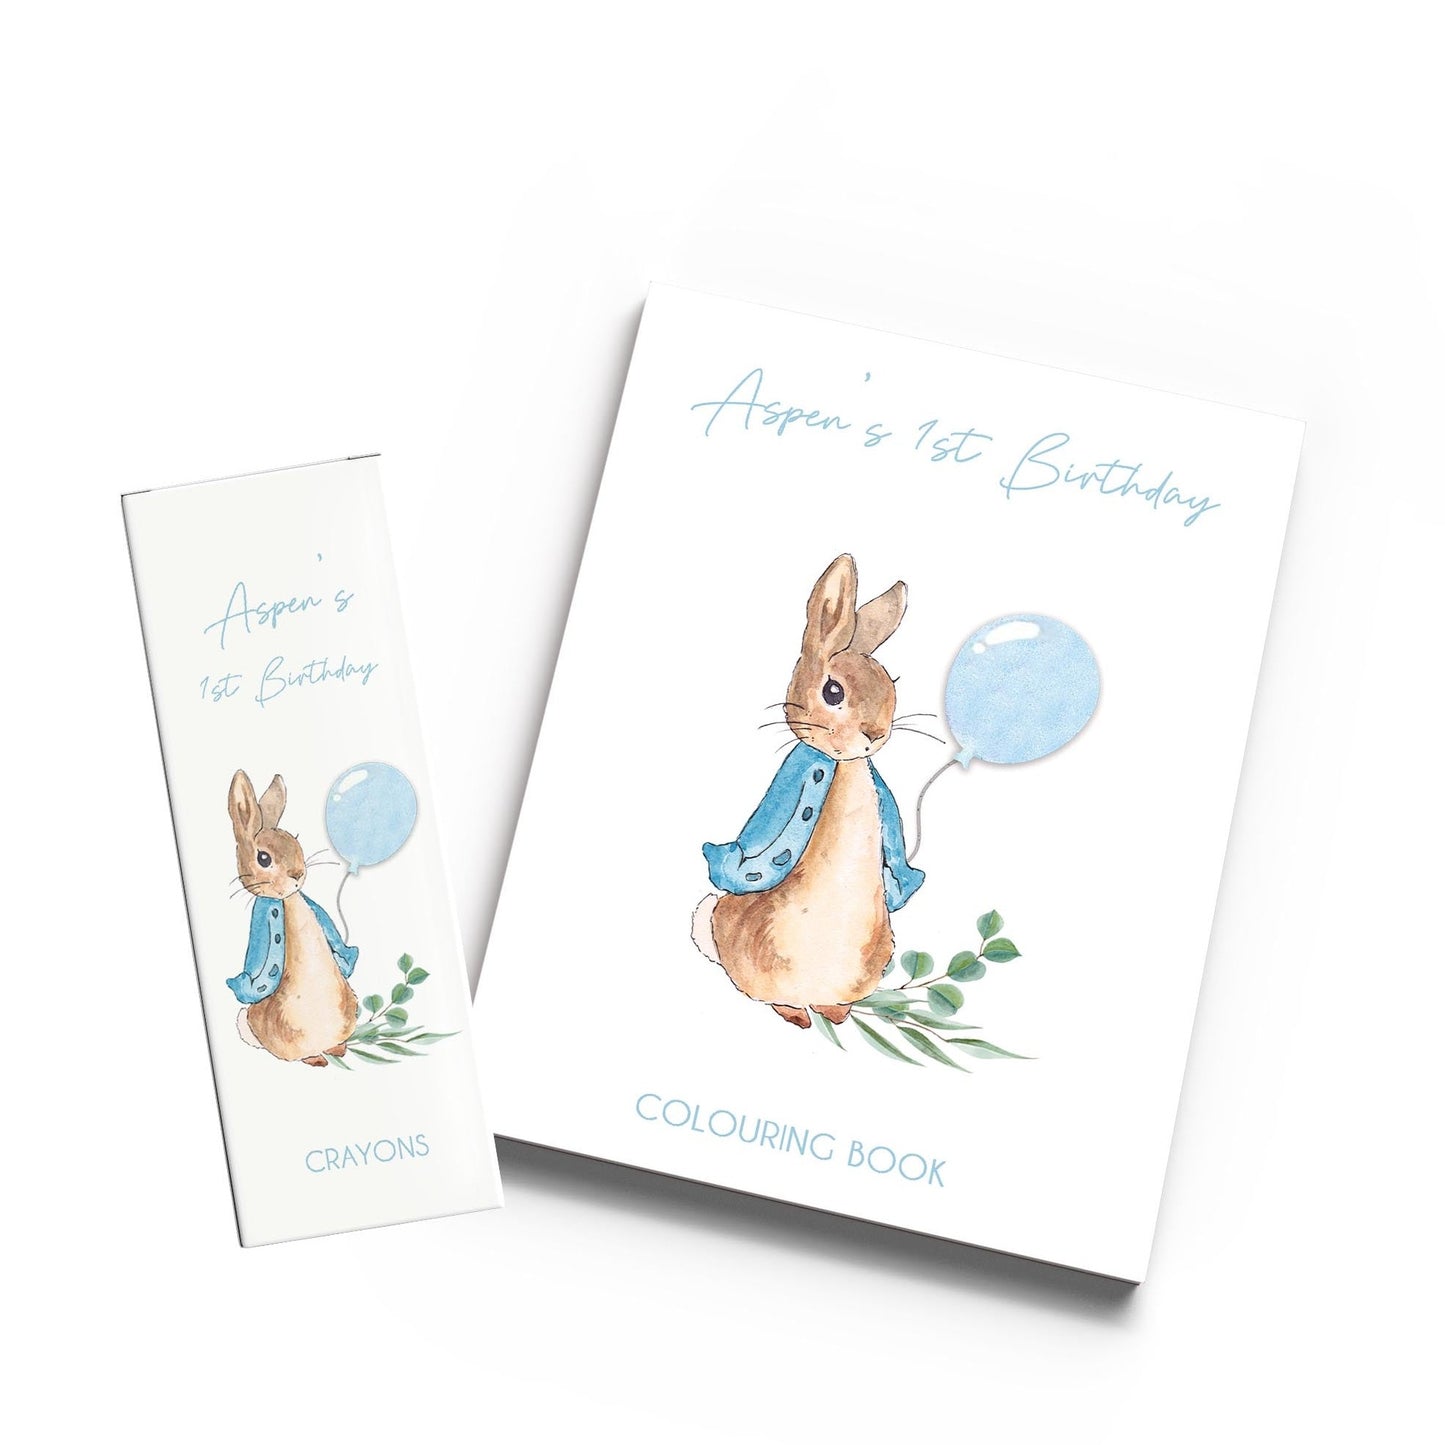 Peter Rabbit Birthday Colouring Book & Crayons